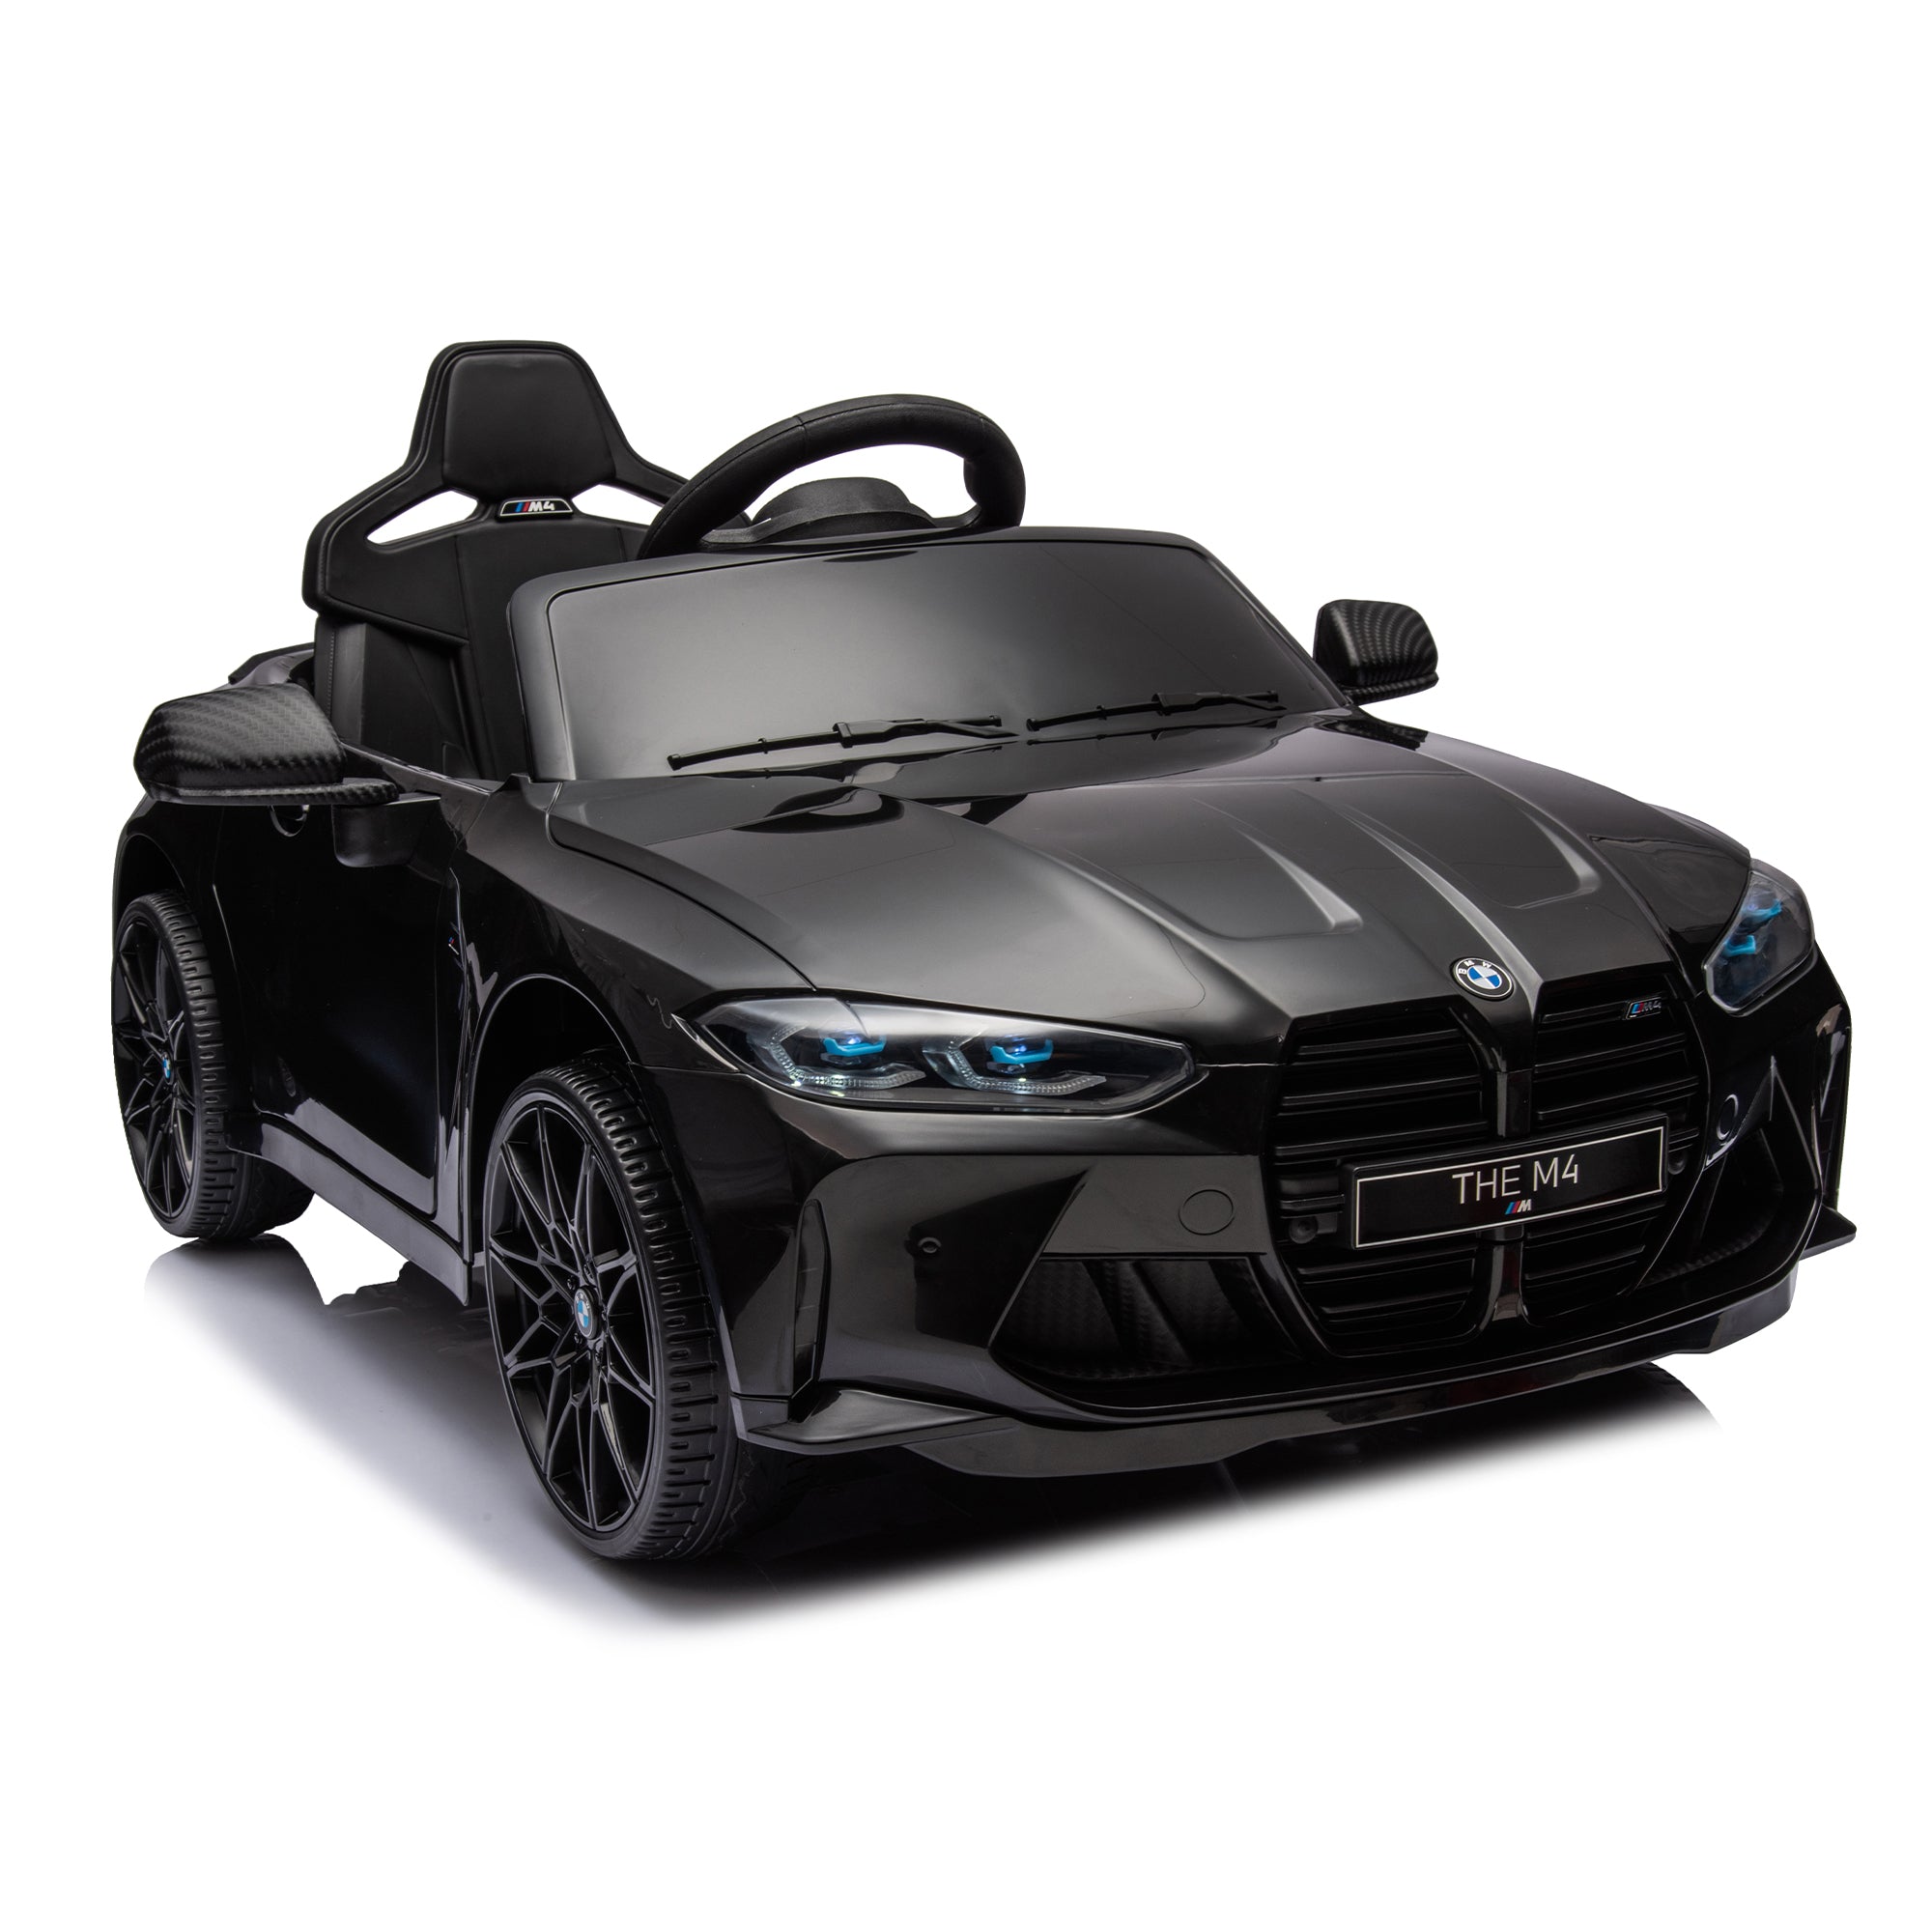 Black BMW M4 12v Kids ride on toy car 2.4G W/Parents Remote Control Three speed adjustable